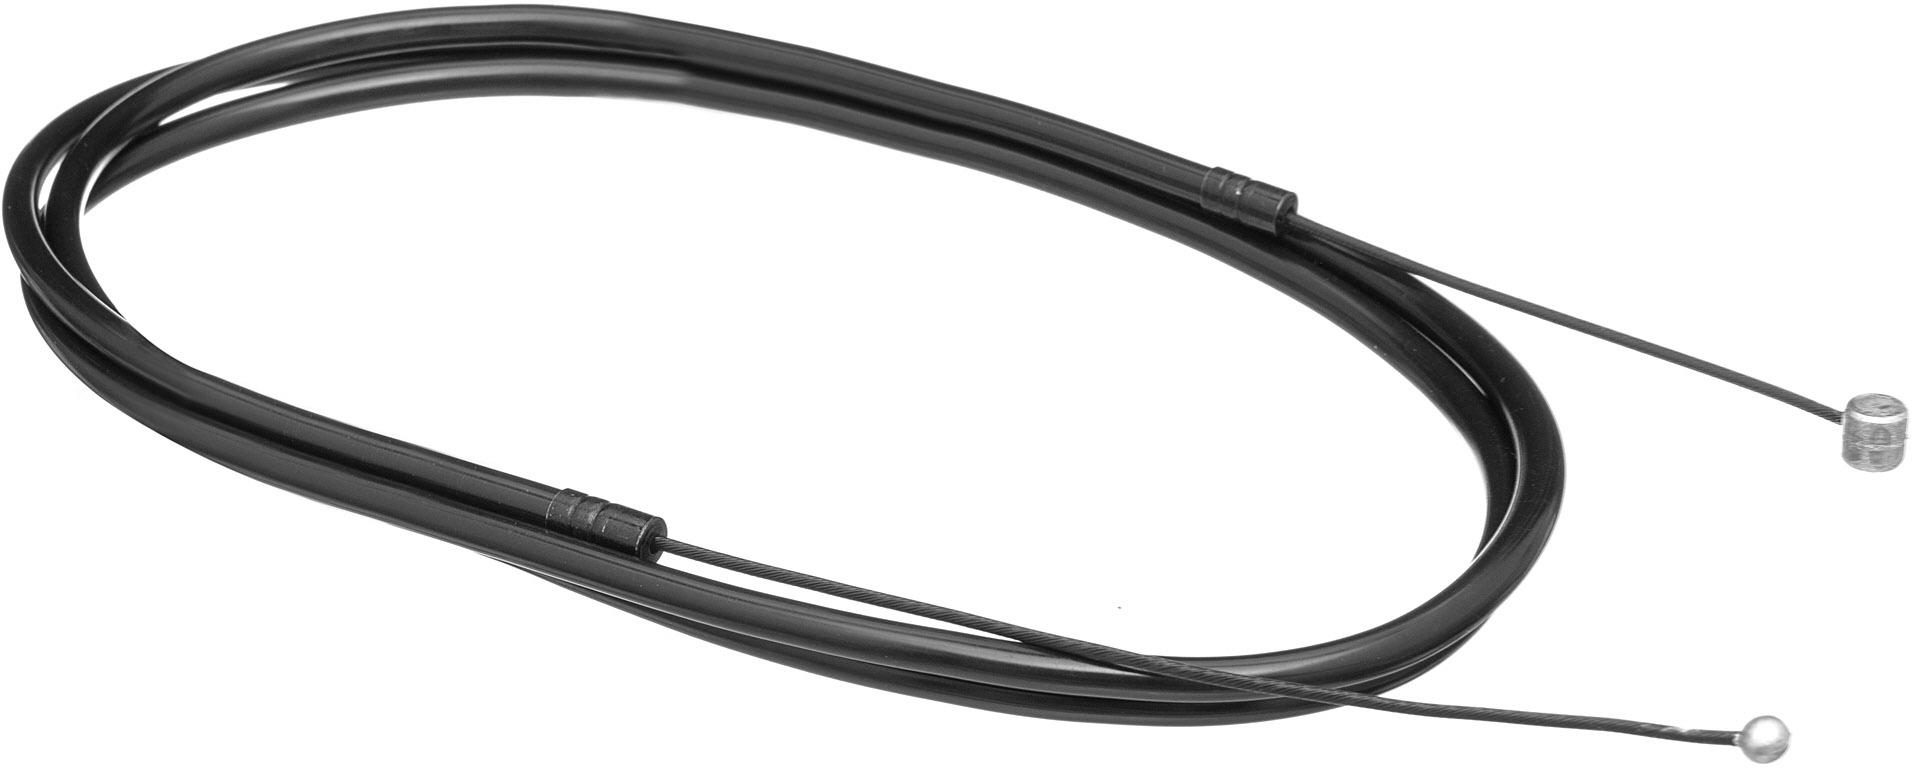 Seal Bmx Progression Linear Bmx Brake Cable  Black